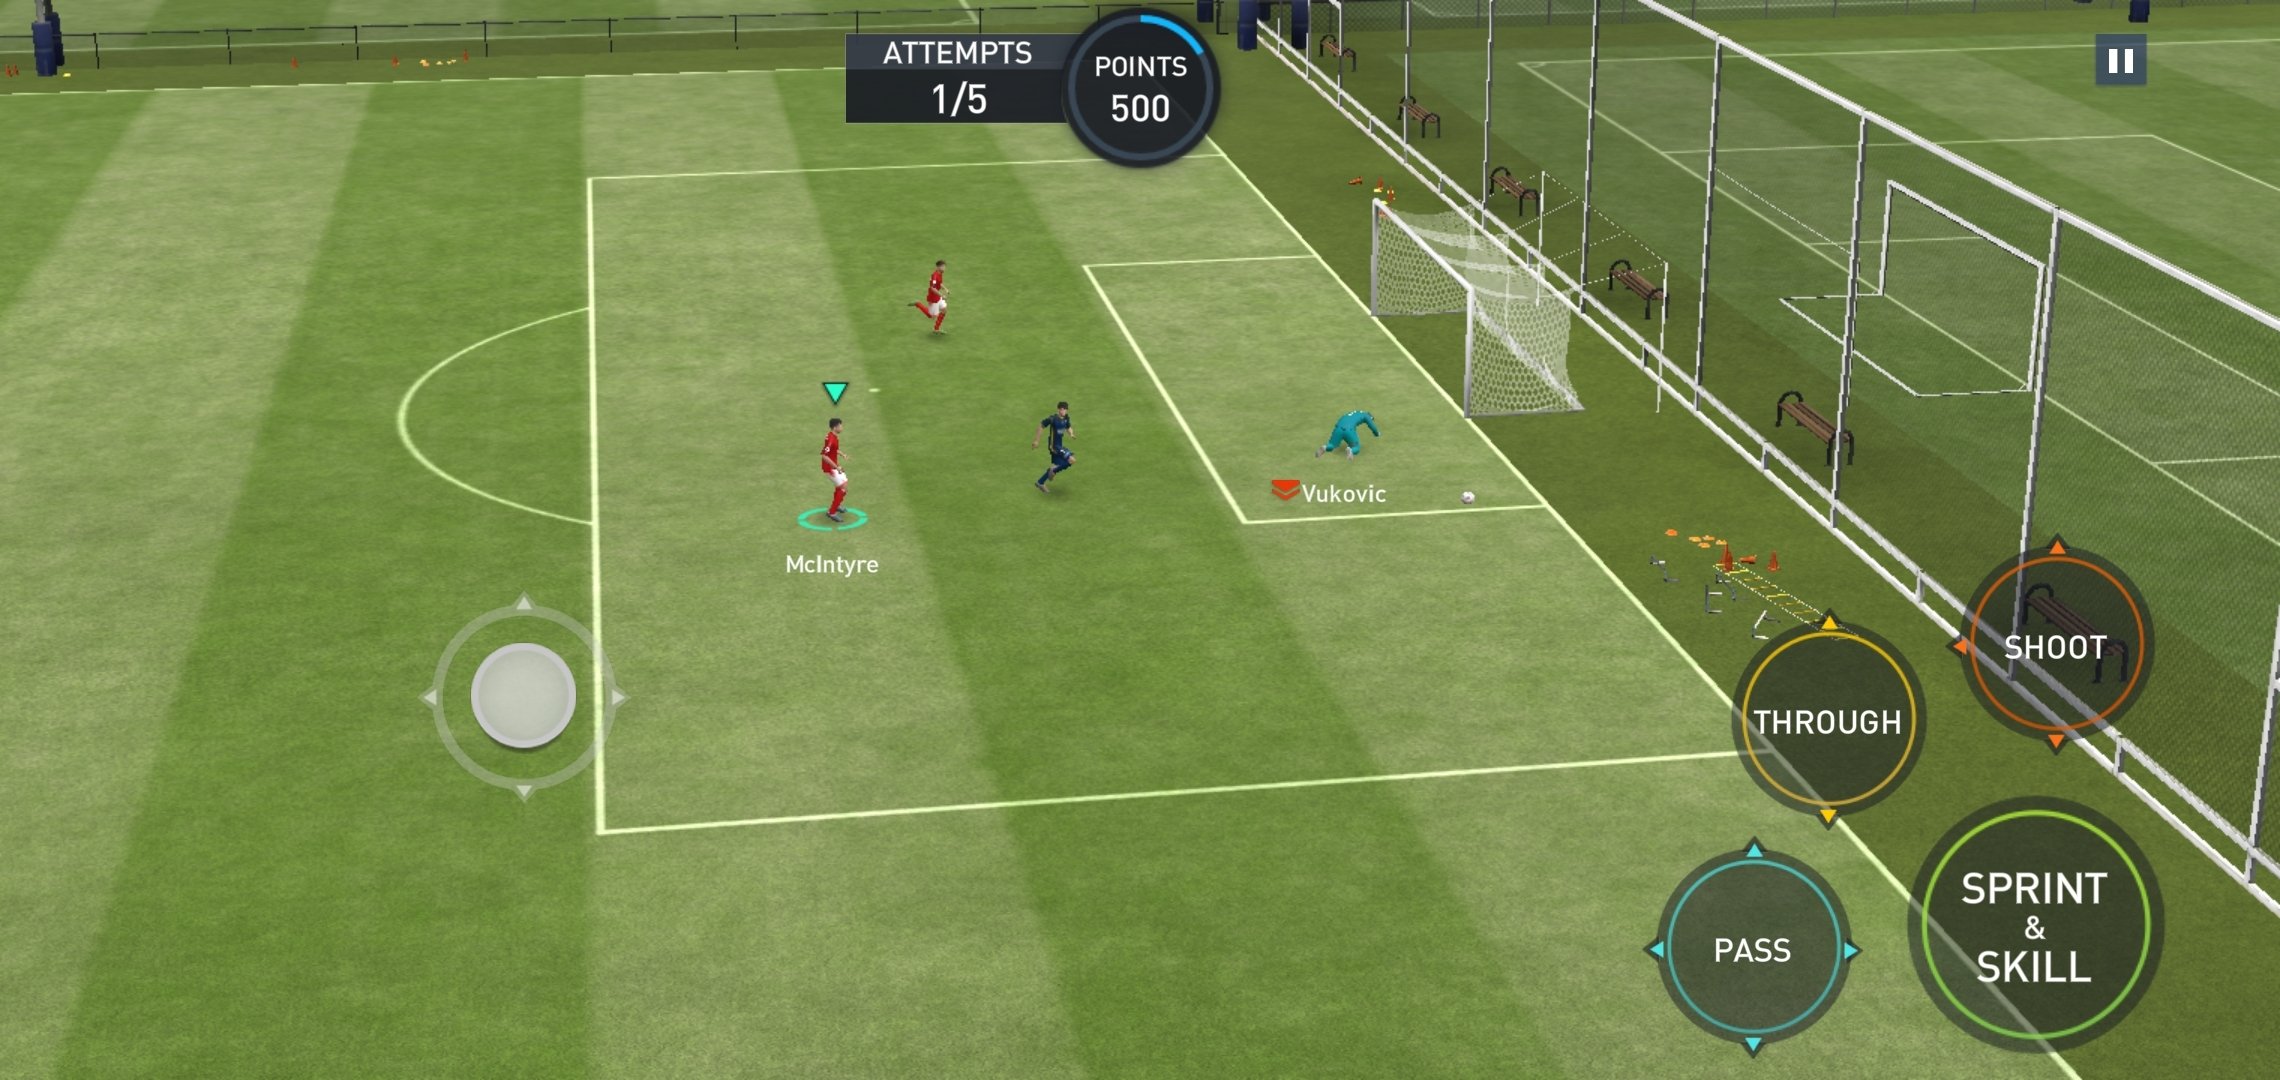 Baixar FIFA Futebol 20.1 Android - Download APK Grátis